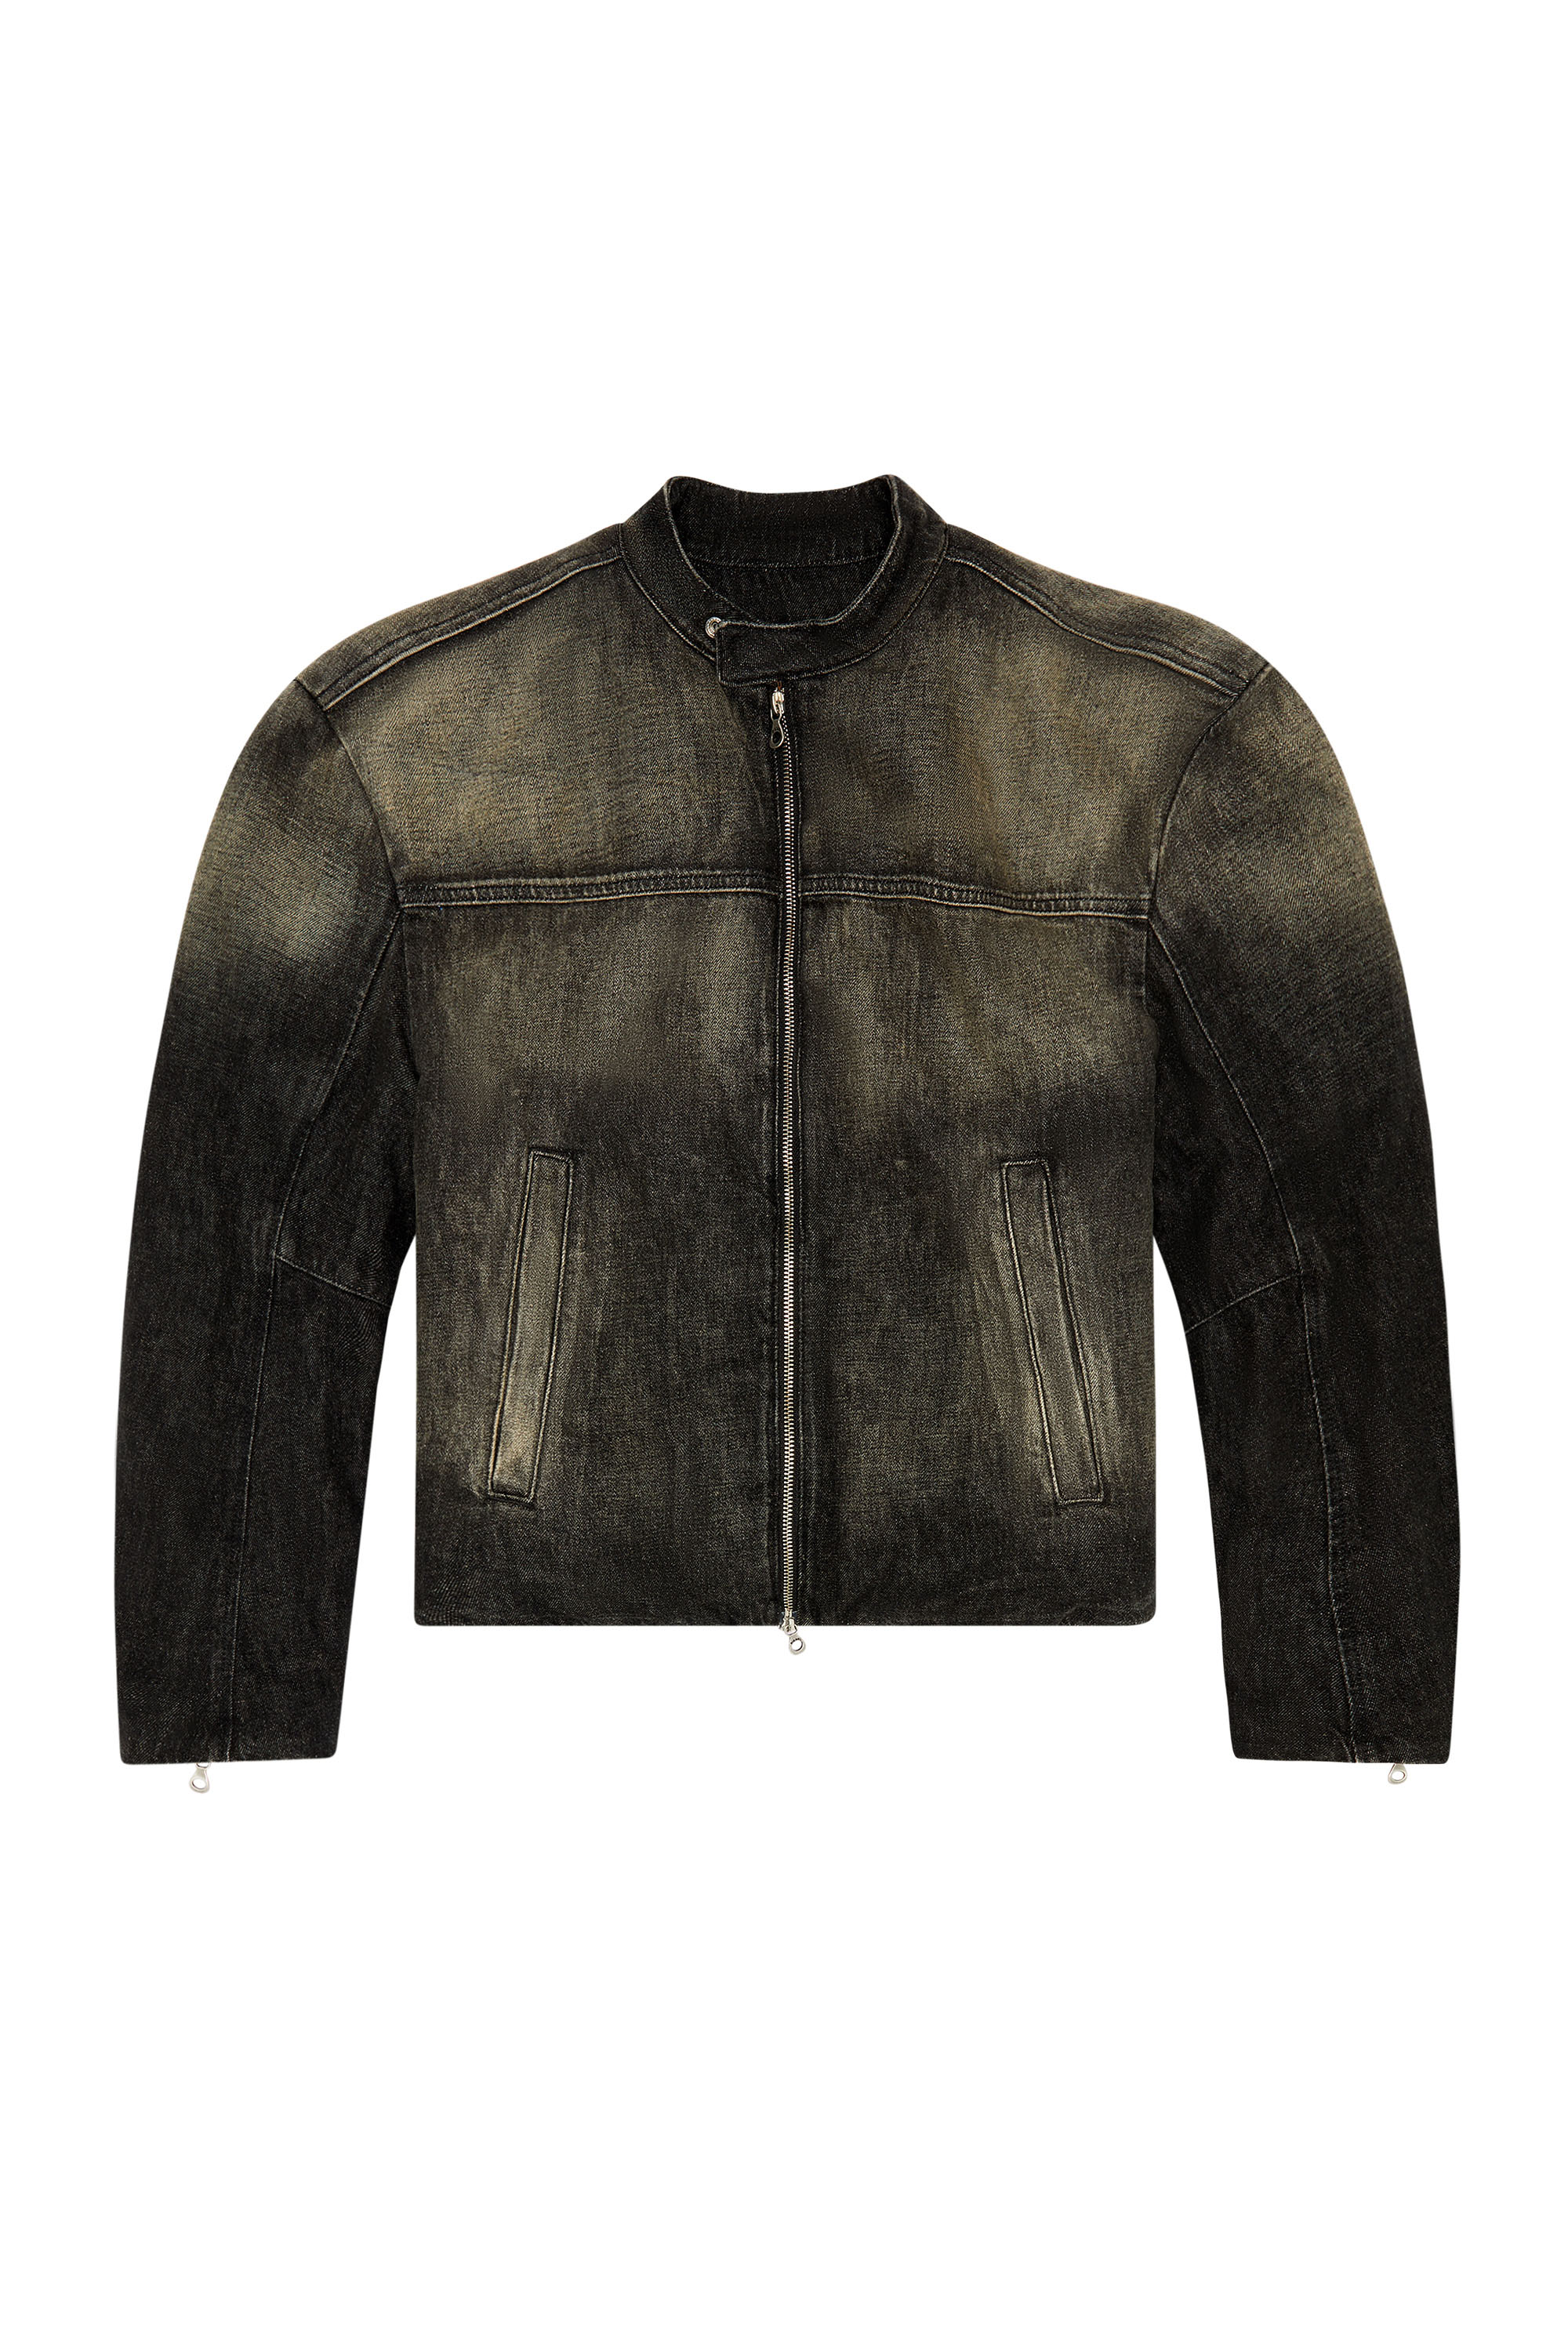 Diesel - D-MARGE-S, Man Denim jacket in cotton and hemp in Black - Image 6